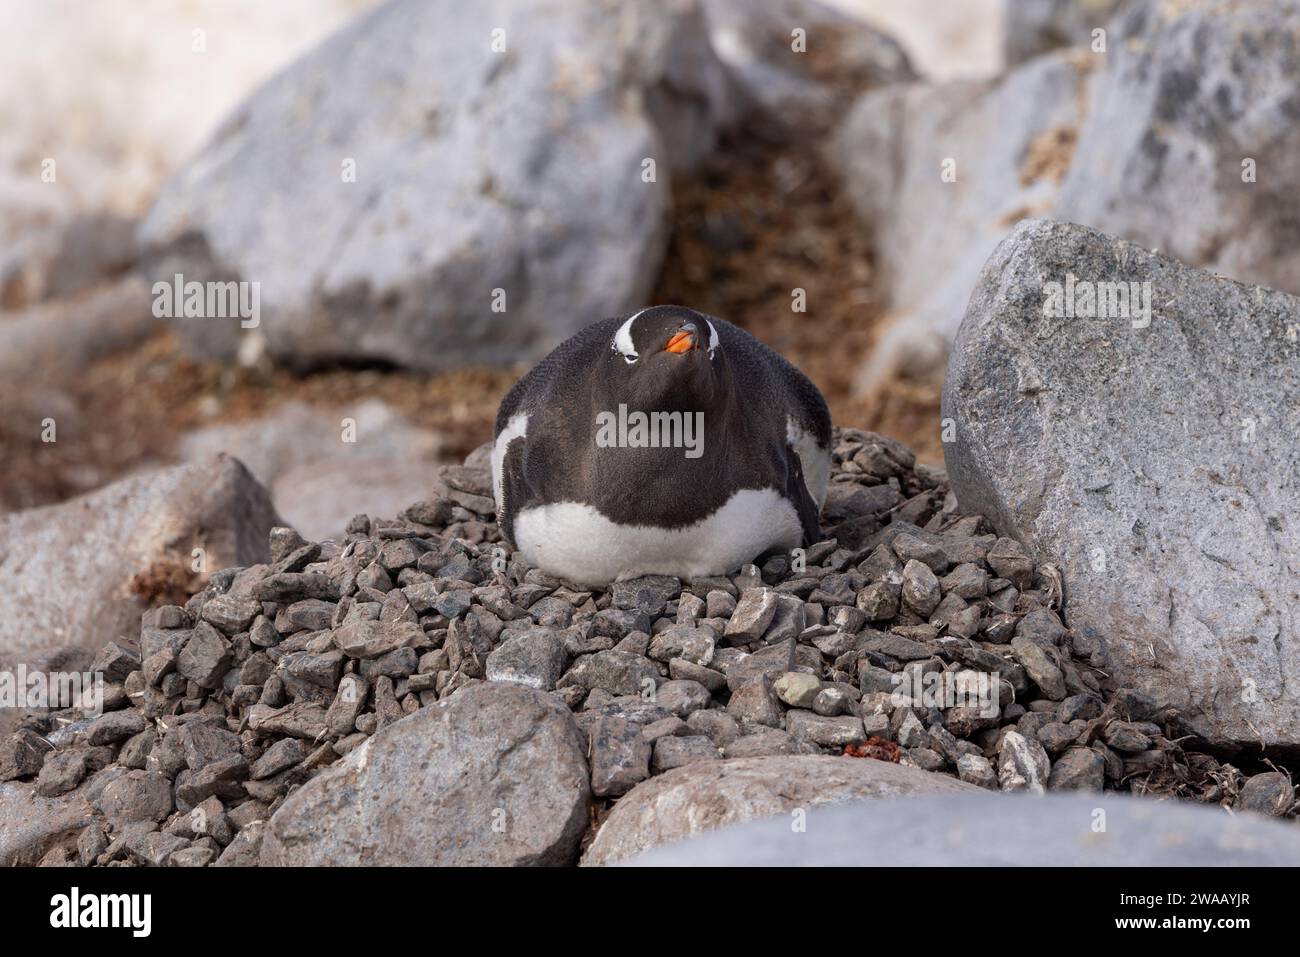 A single Gentoo penguin on a nest facing the camera. Stock Photo